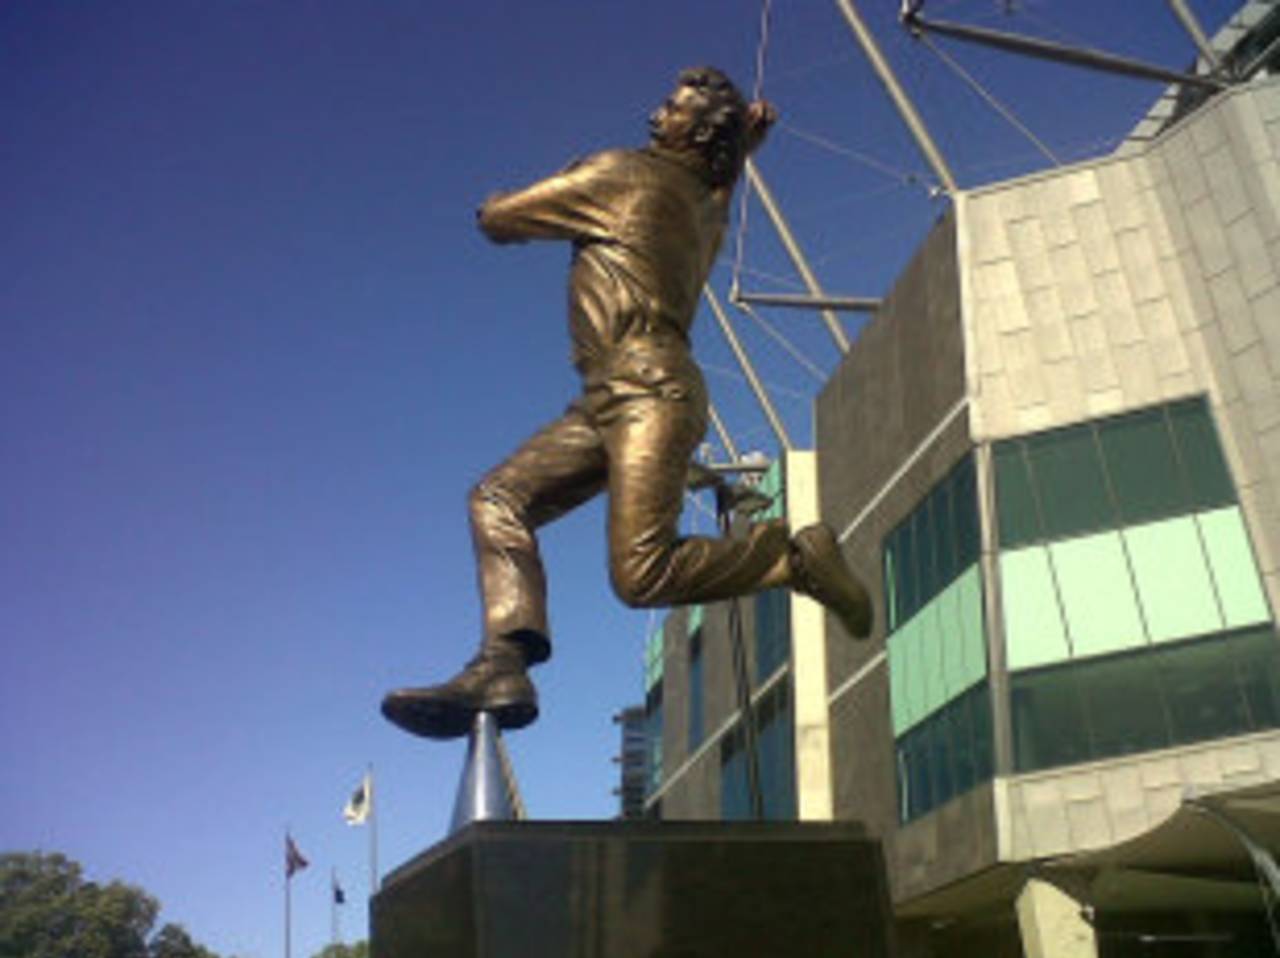 Dennis Lillee welcomes you to the Melbourne Cricket Ground&nbsp;&nbsp;&bull;&nbsp;&nbsp;Firdose Moonda/ESPNcricinfo Ltd